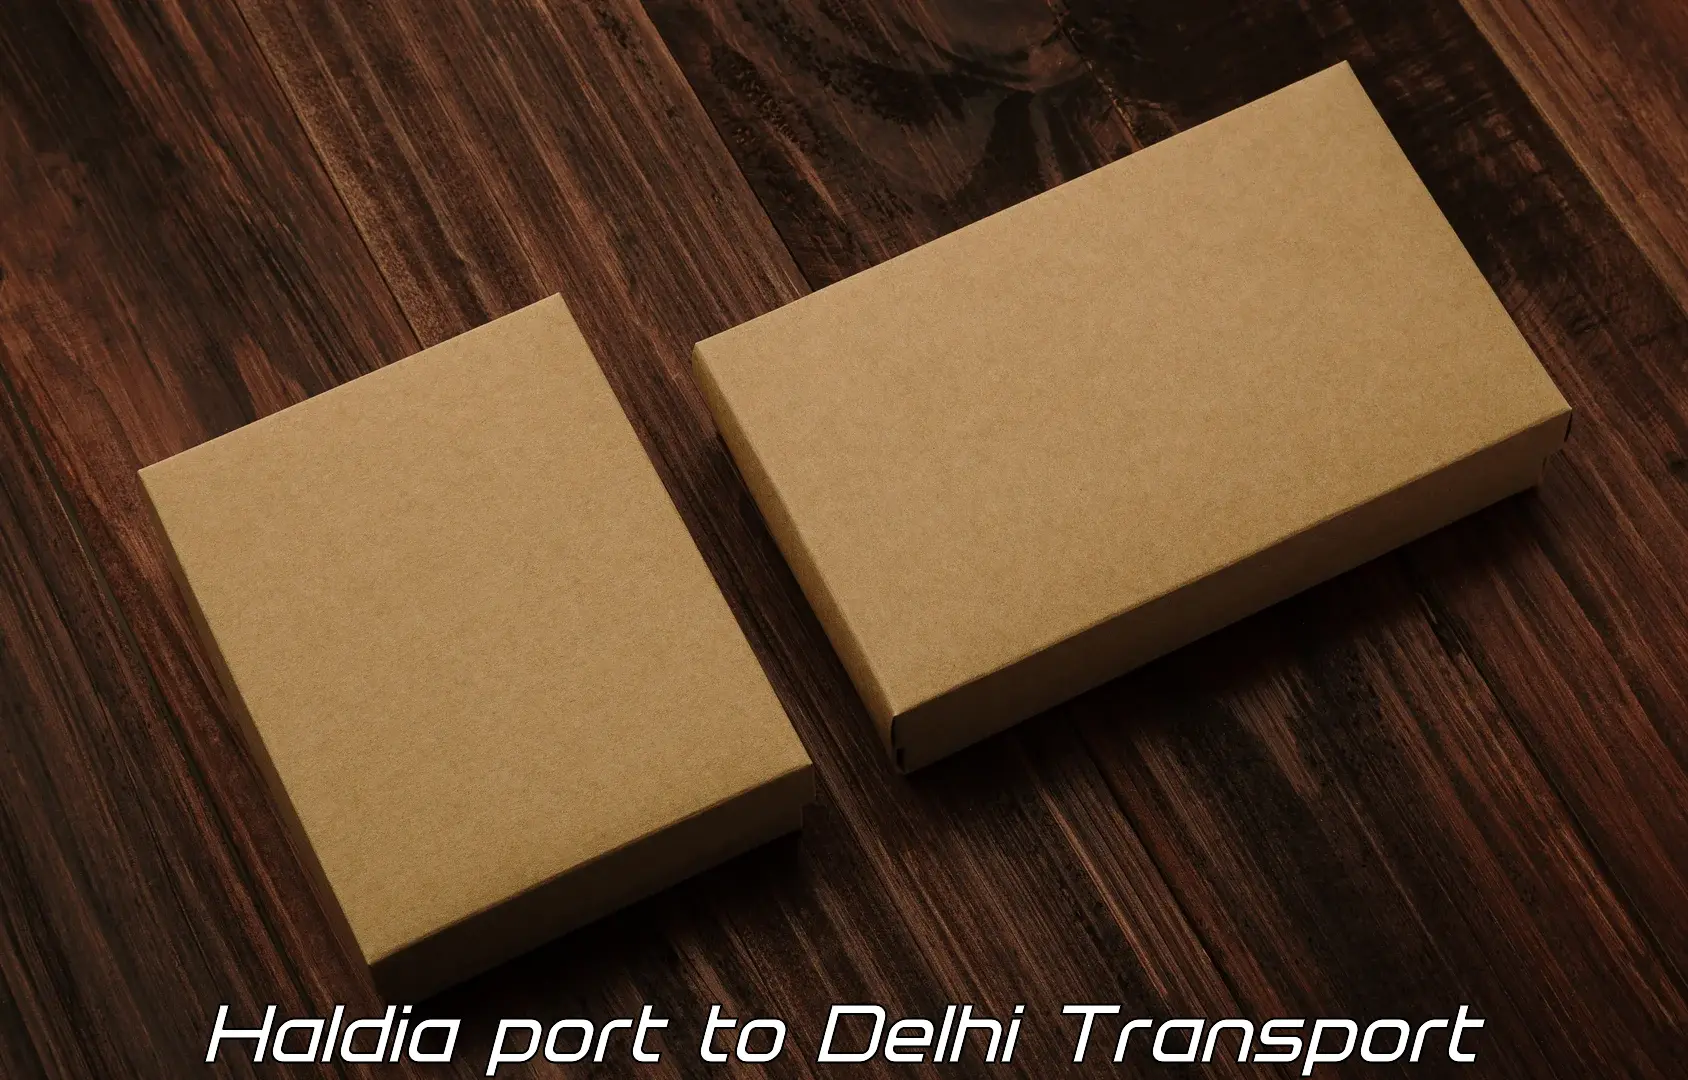 Transport services Haldia port to NCR